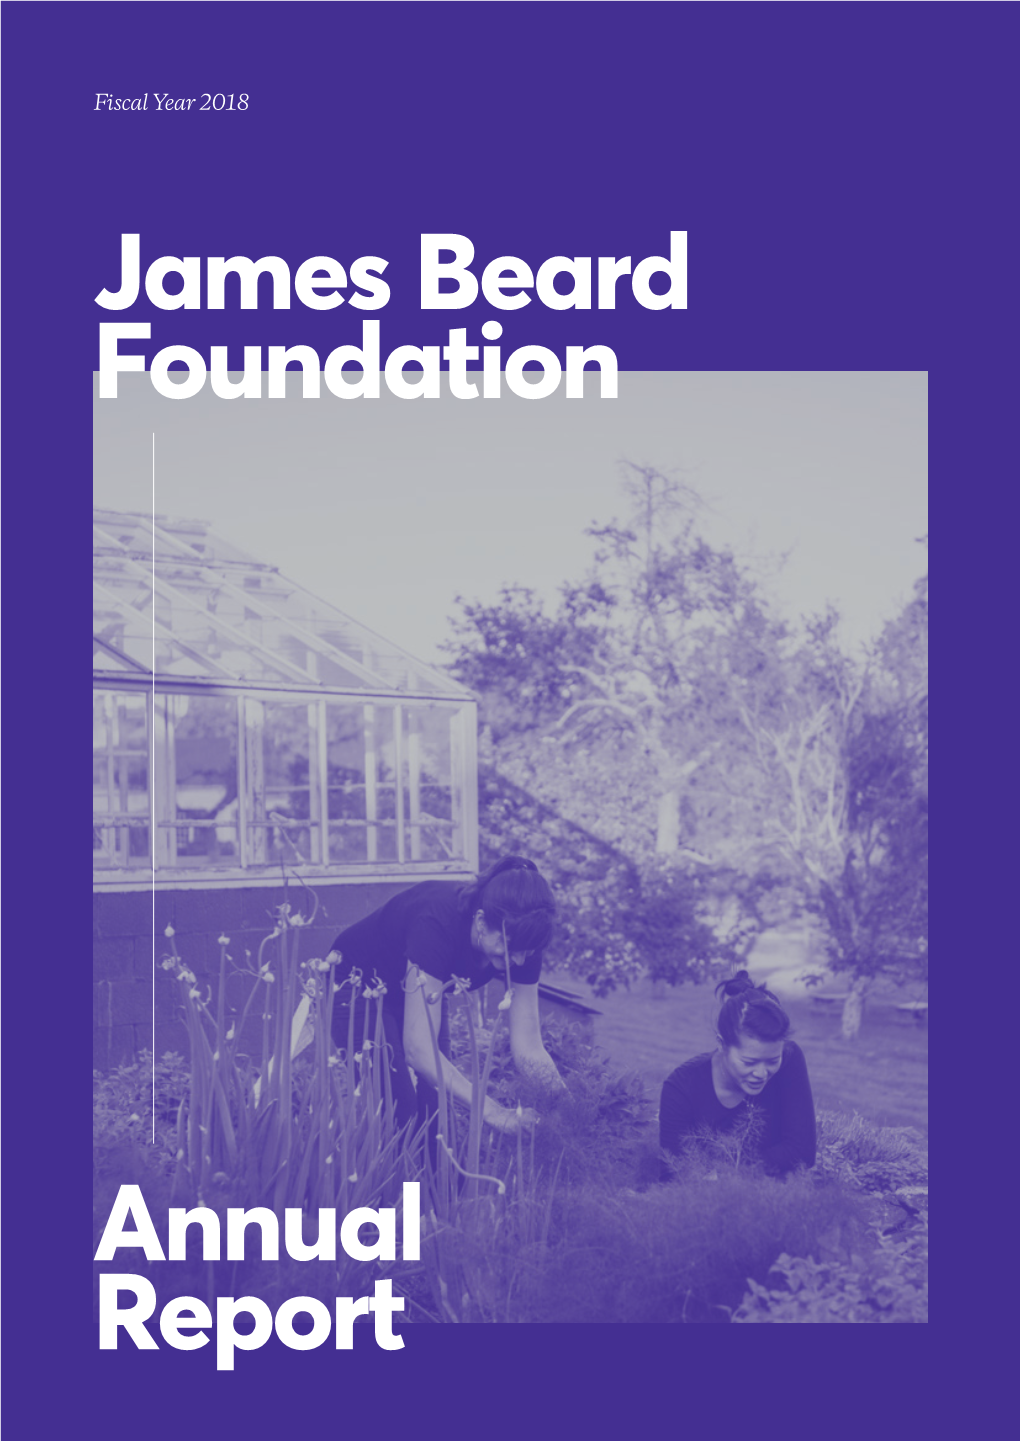 James Beard Foundation Annual Report